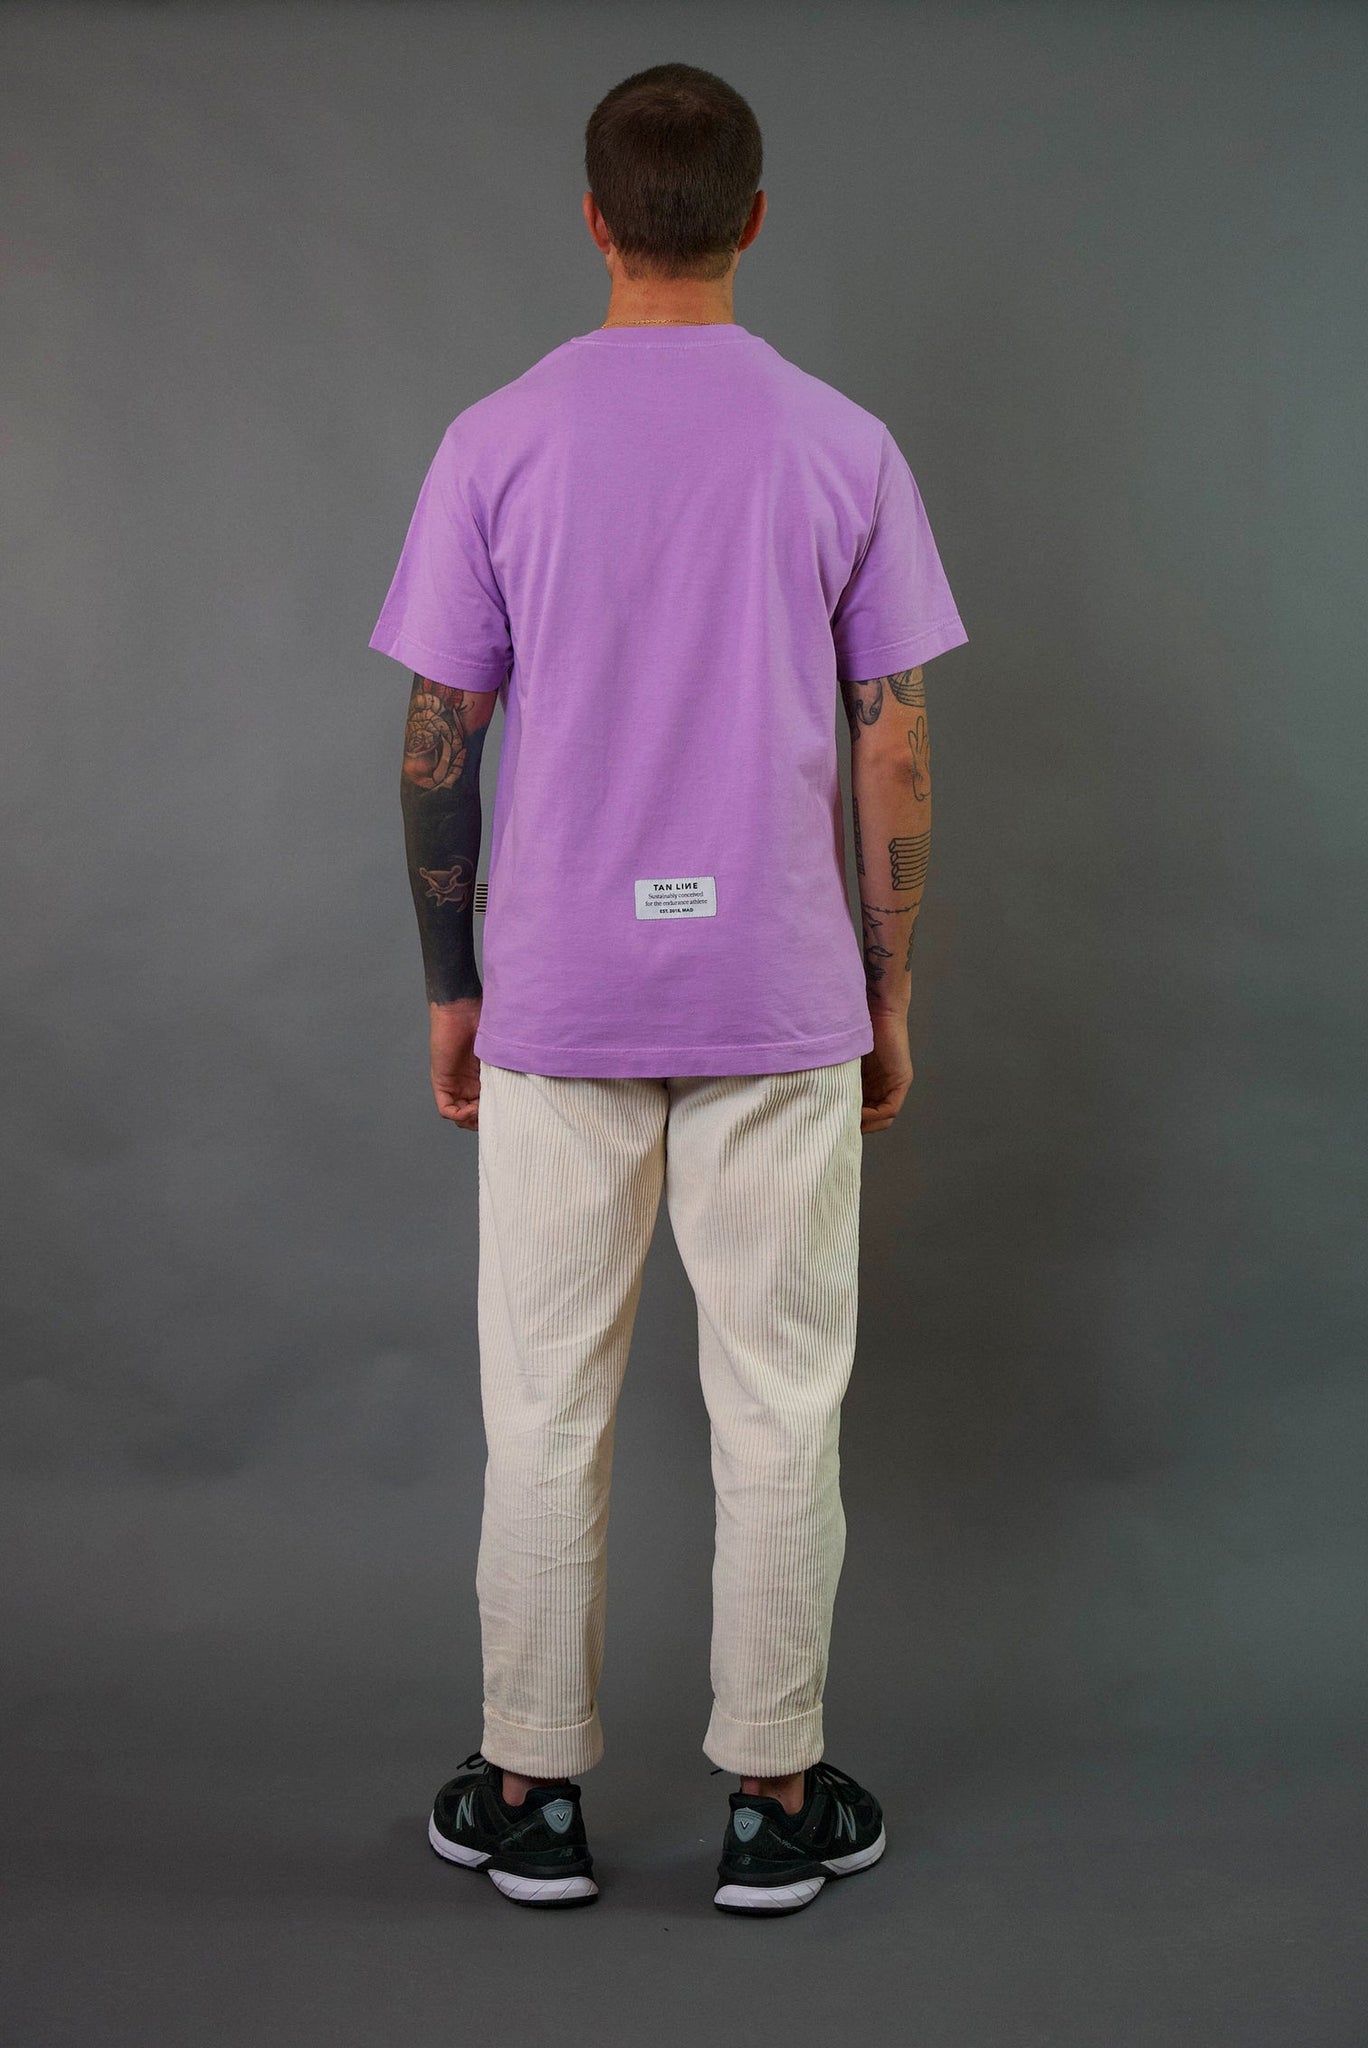 <span class="n-alreves">N</span>Camiseta algodón orgánico Lilac